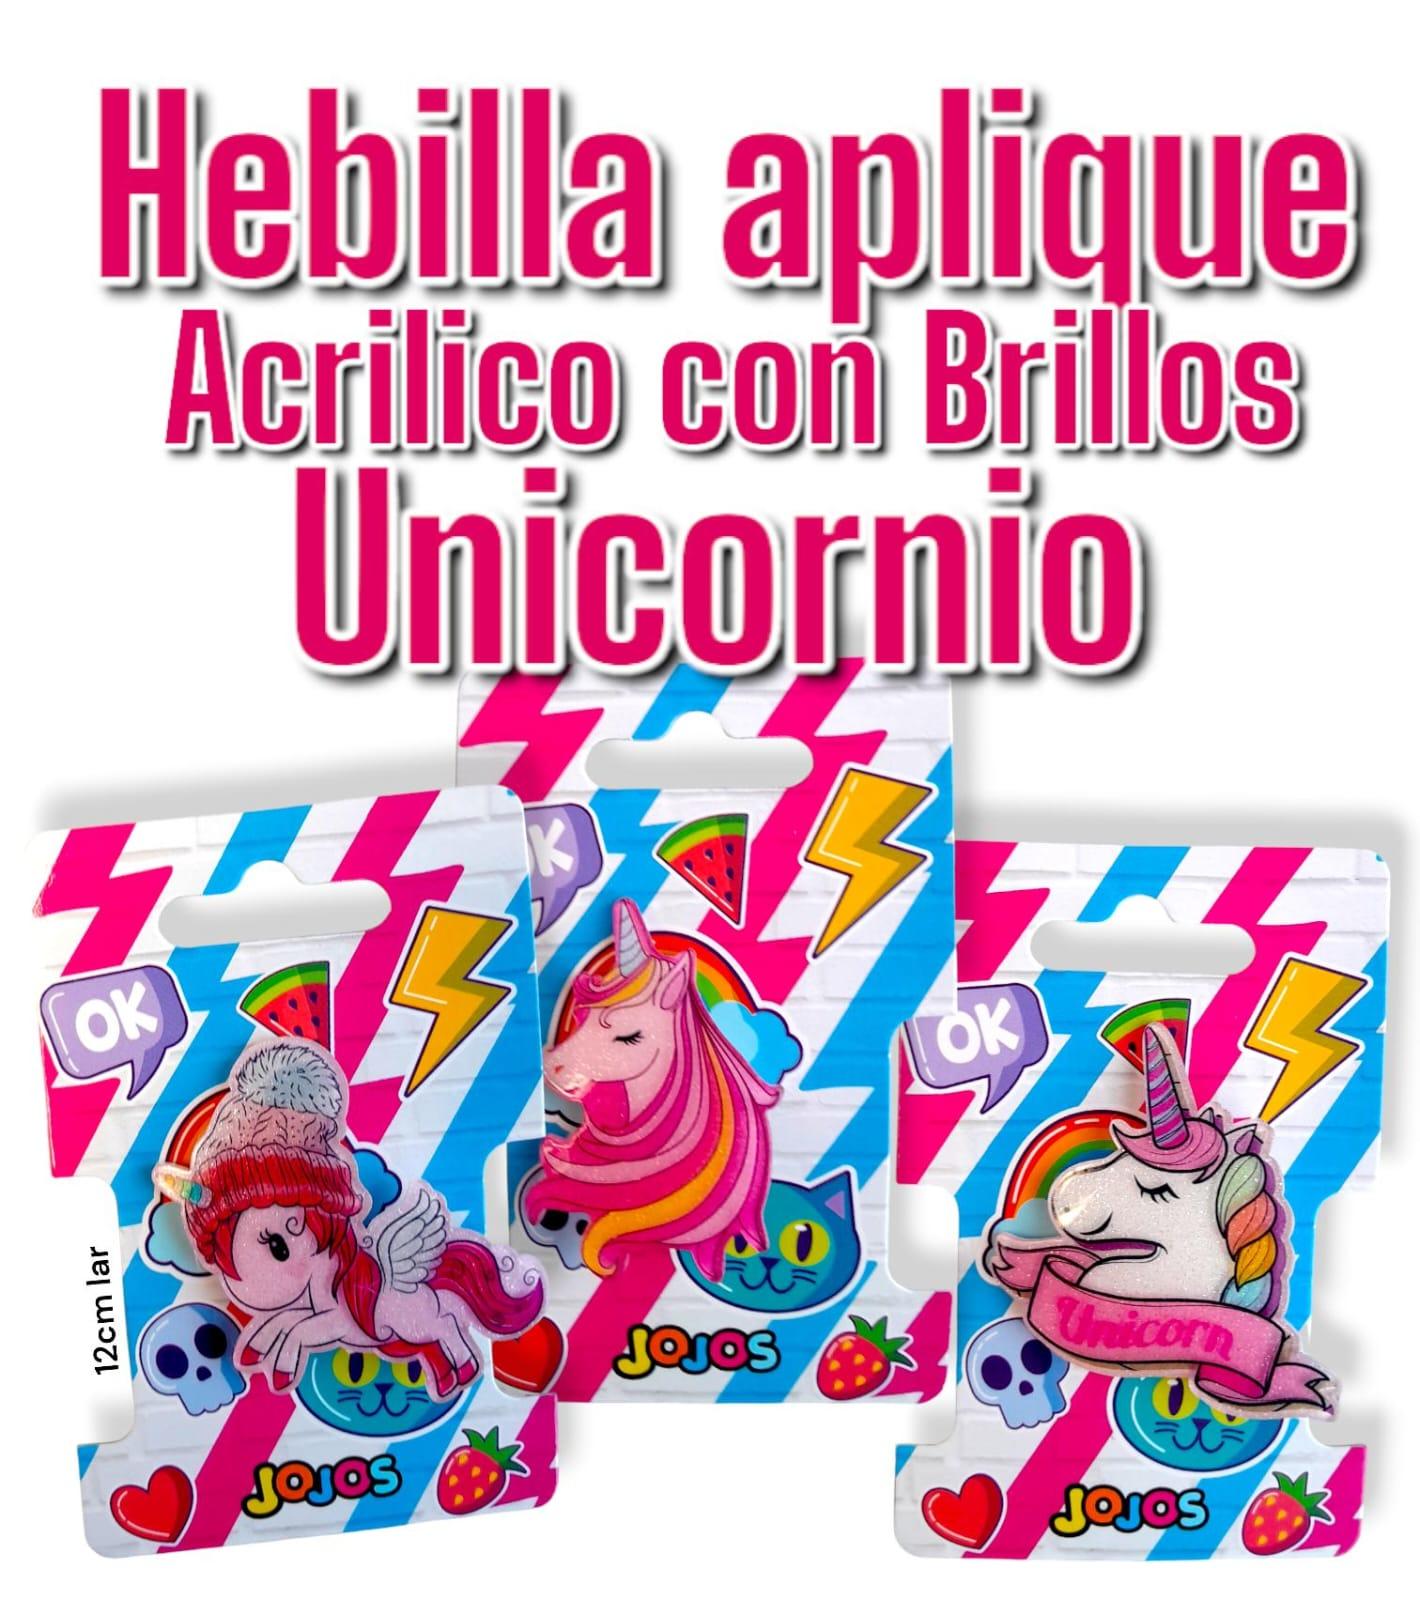 Hebilla Aplique Acrilico con Brillos Unicornio